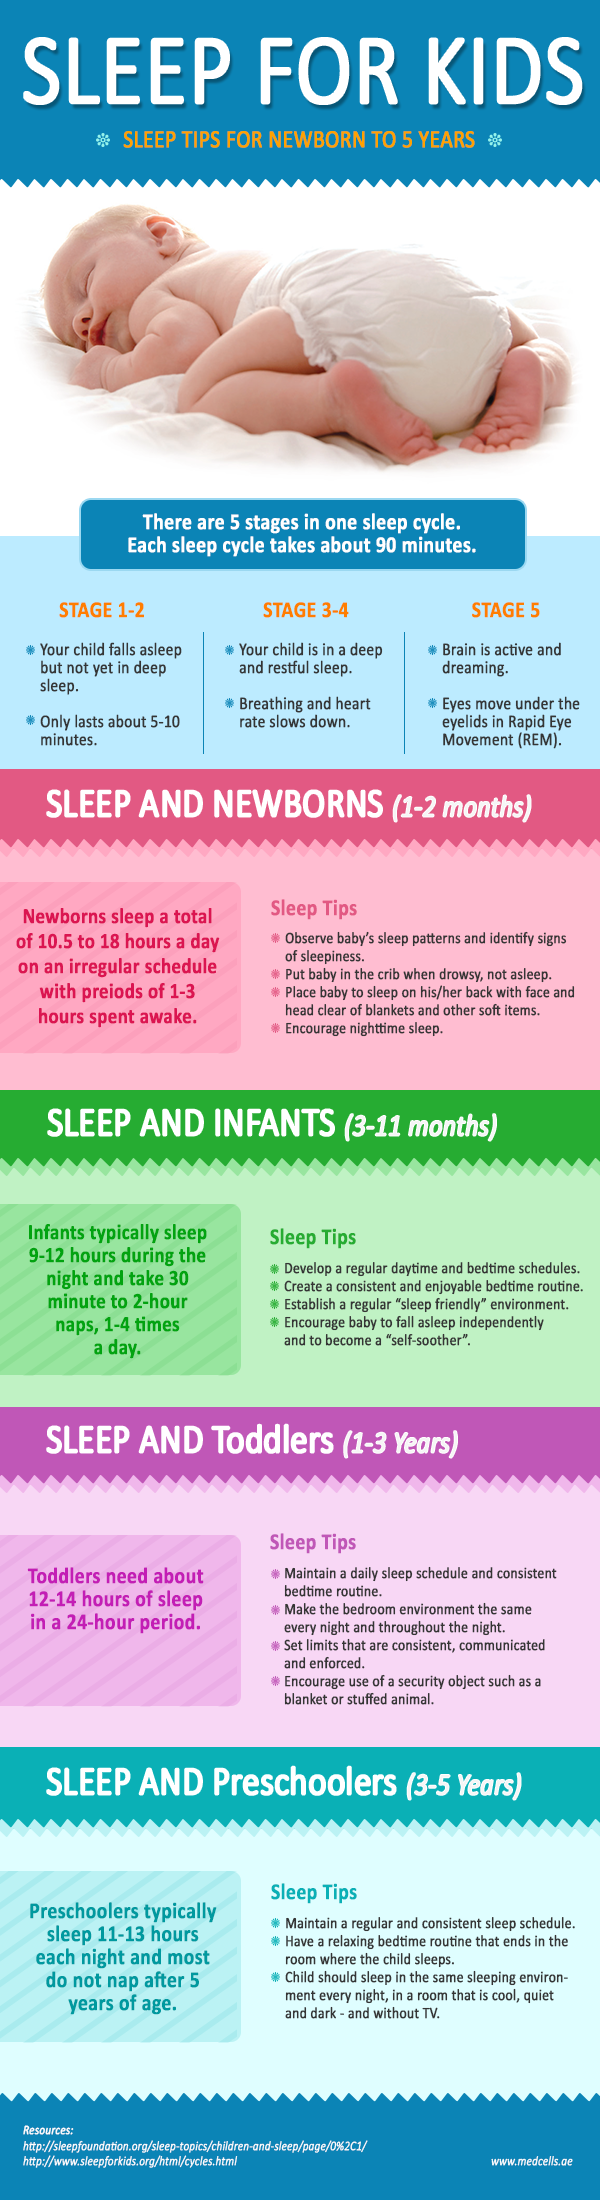 Sleep Tips for Kids